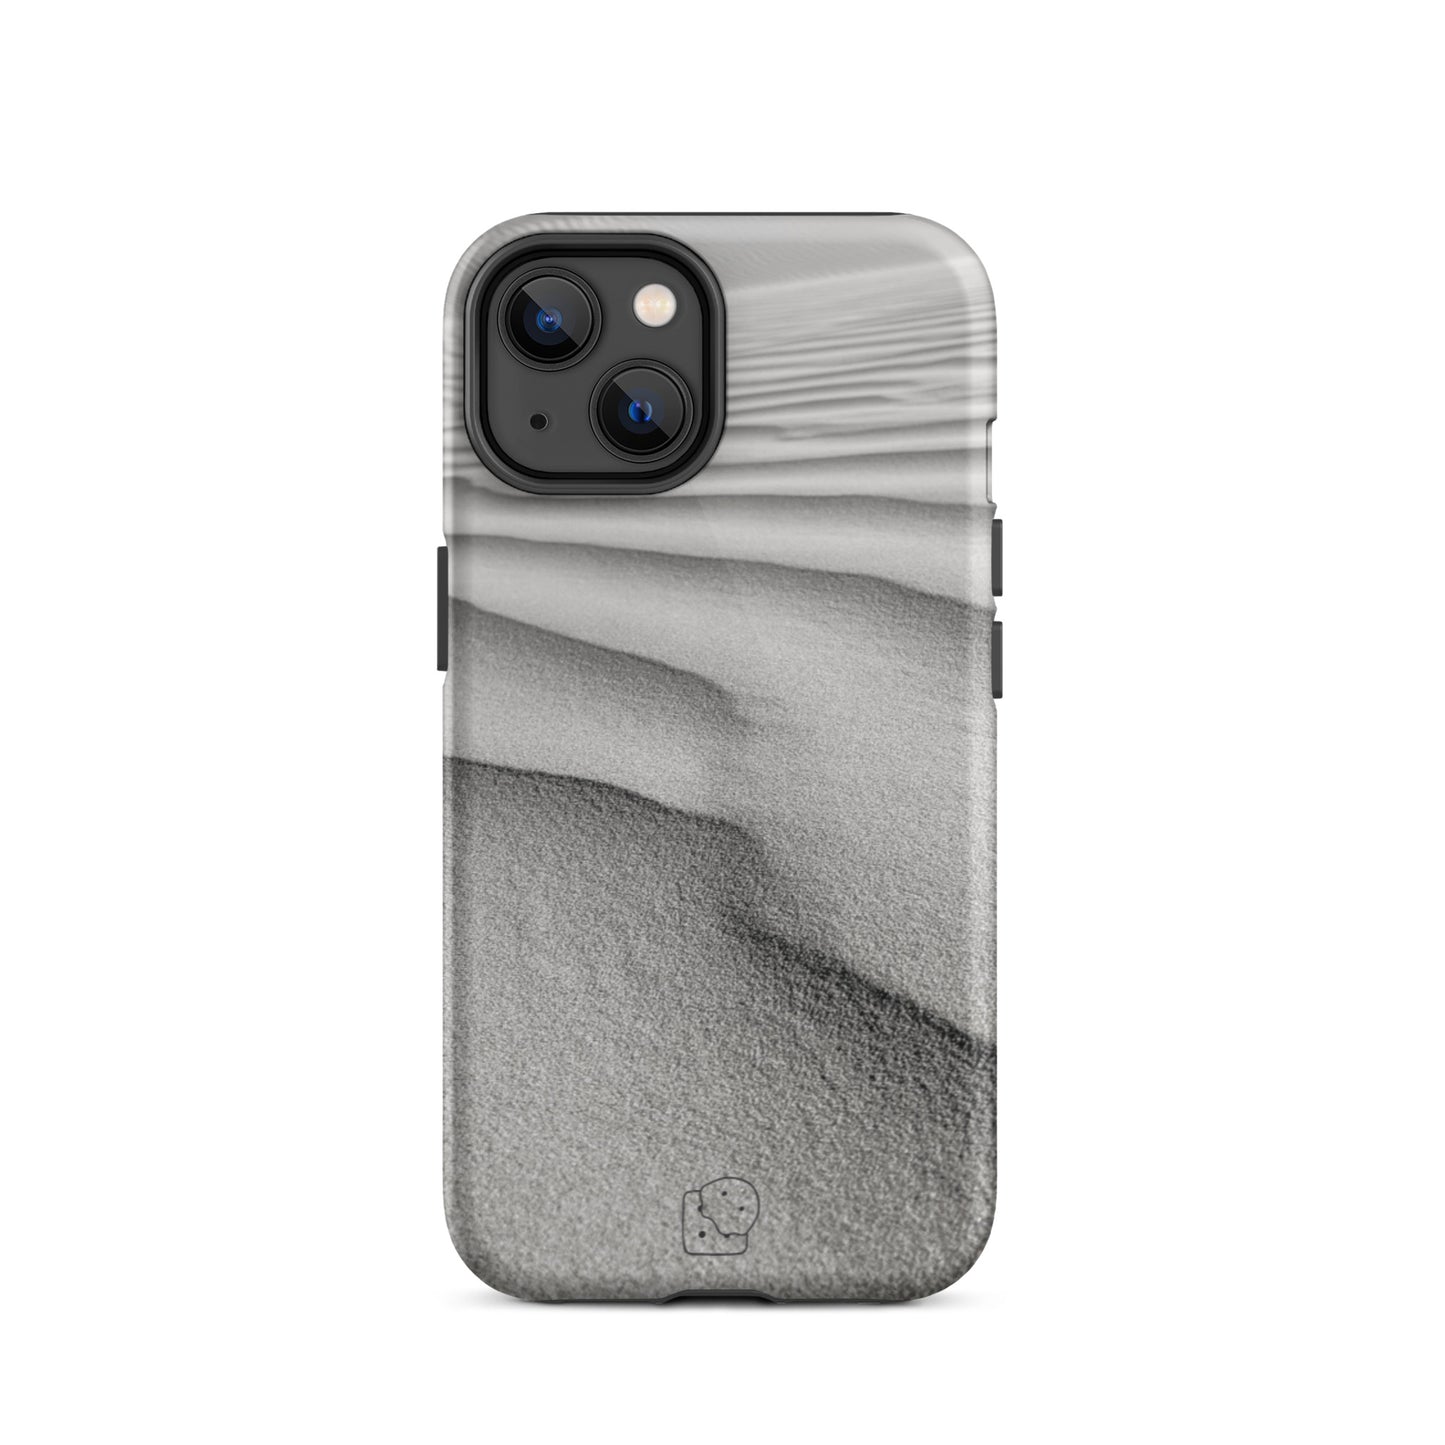 Davis' Grains of Sand Tough iPhone Case